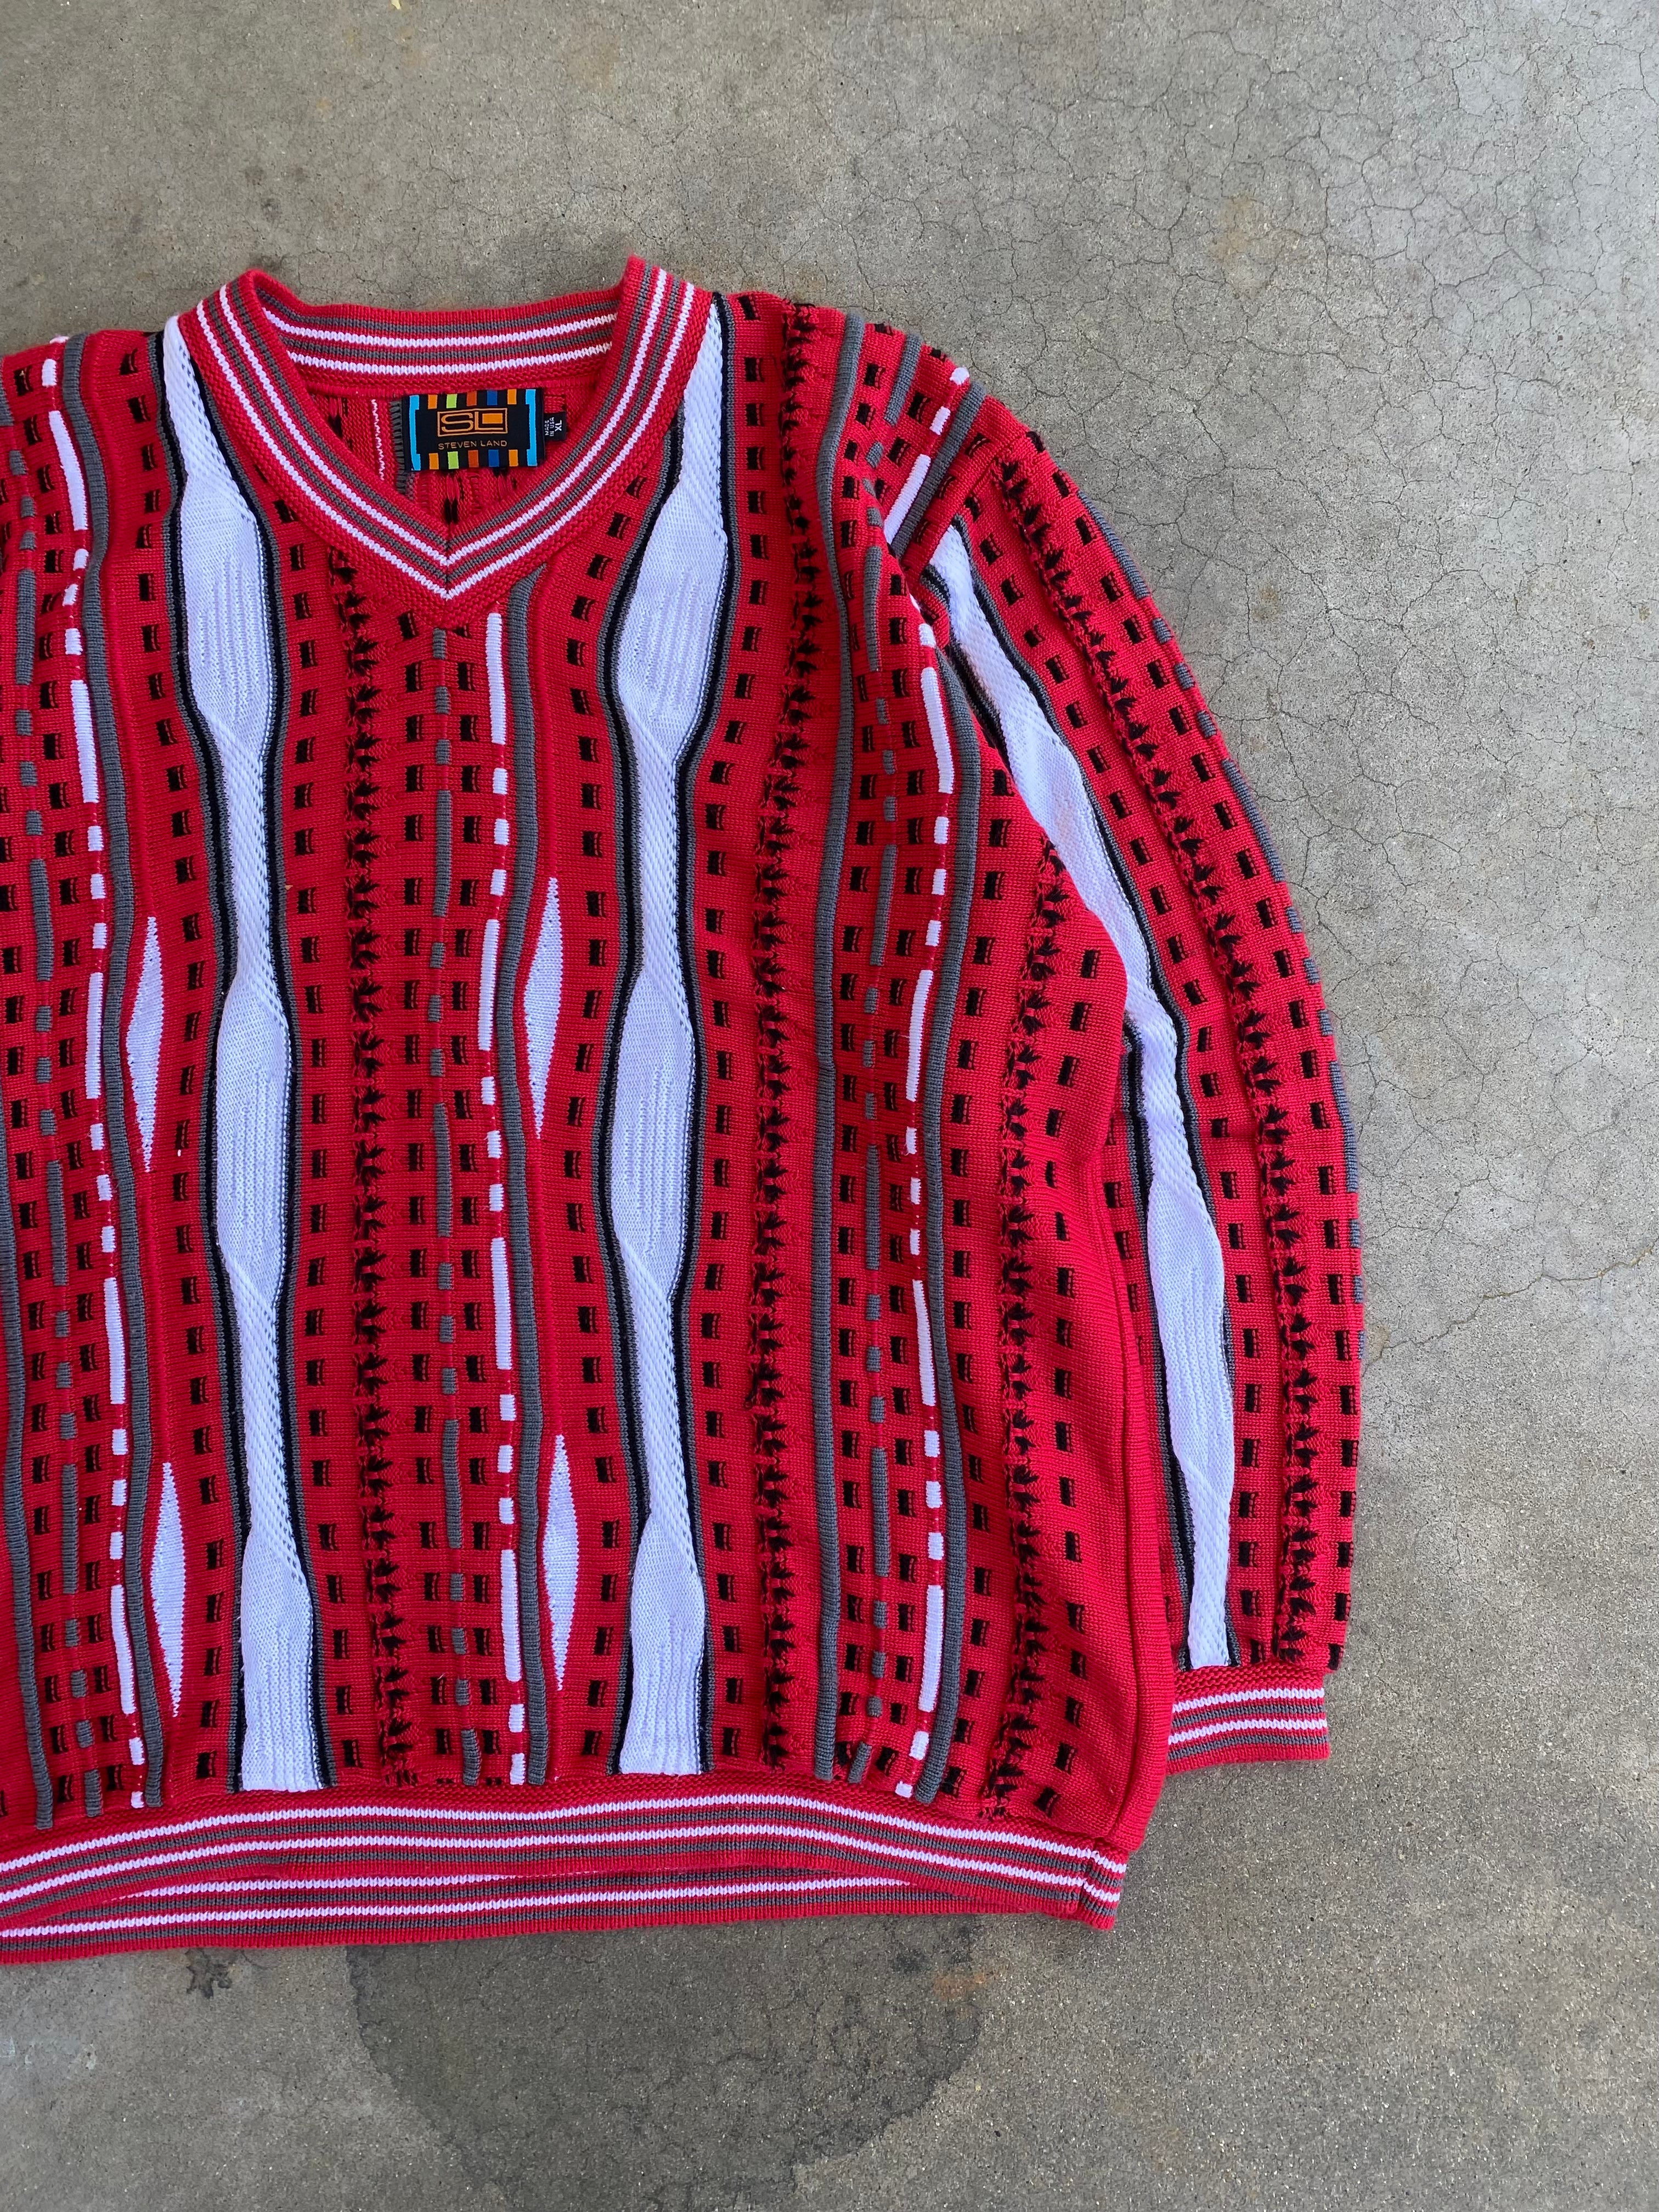 1990s Steven Land Coogi Style Sweater (XL)